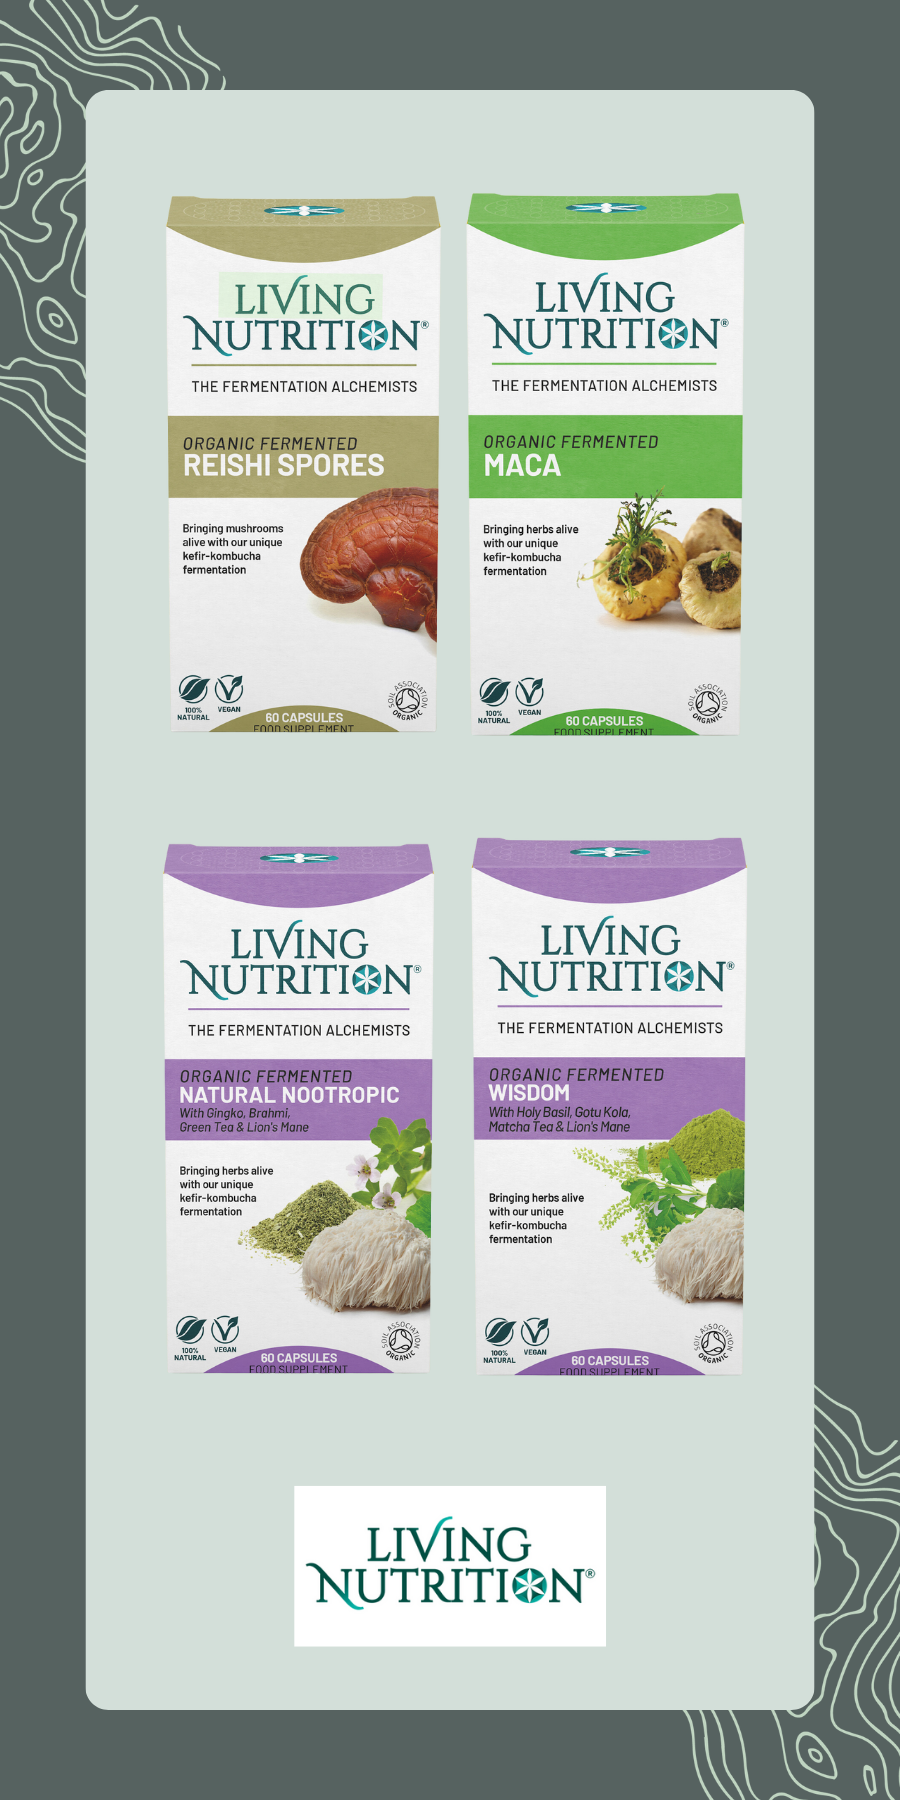 Living Nutrition Nootropic-, Reishi spores-, Wisdom- ja Maca lisäravinteet.